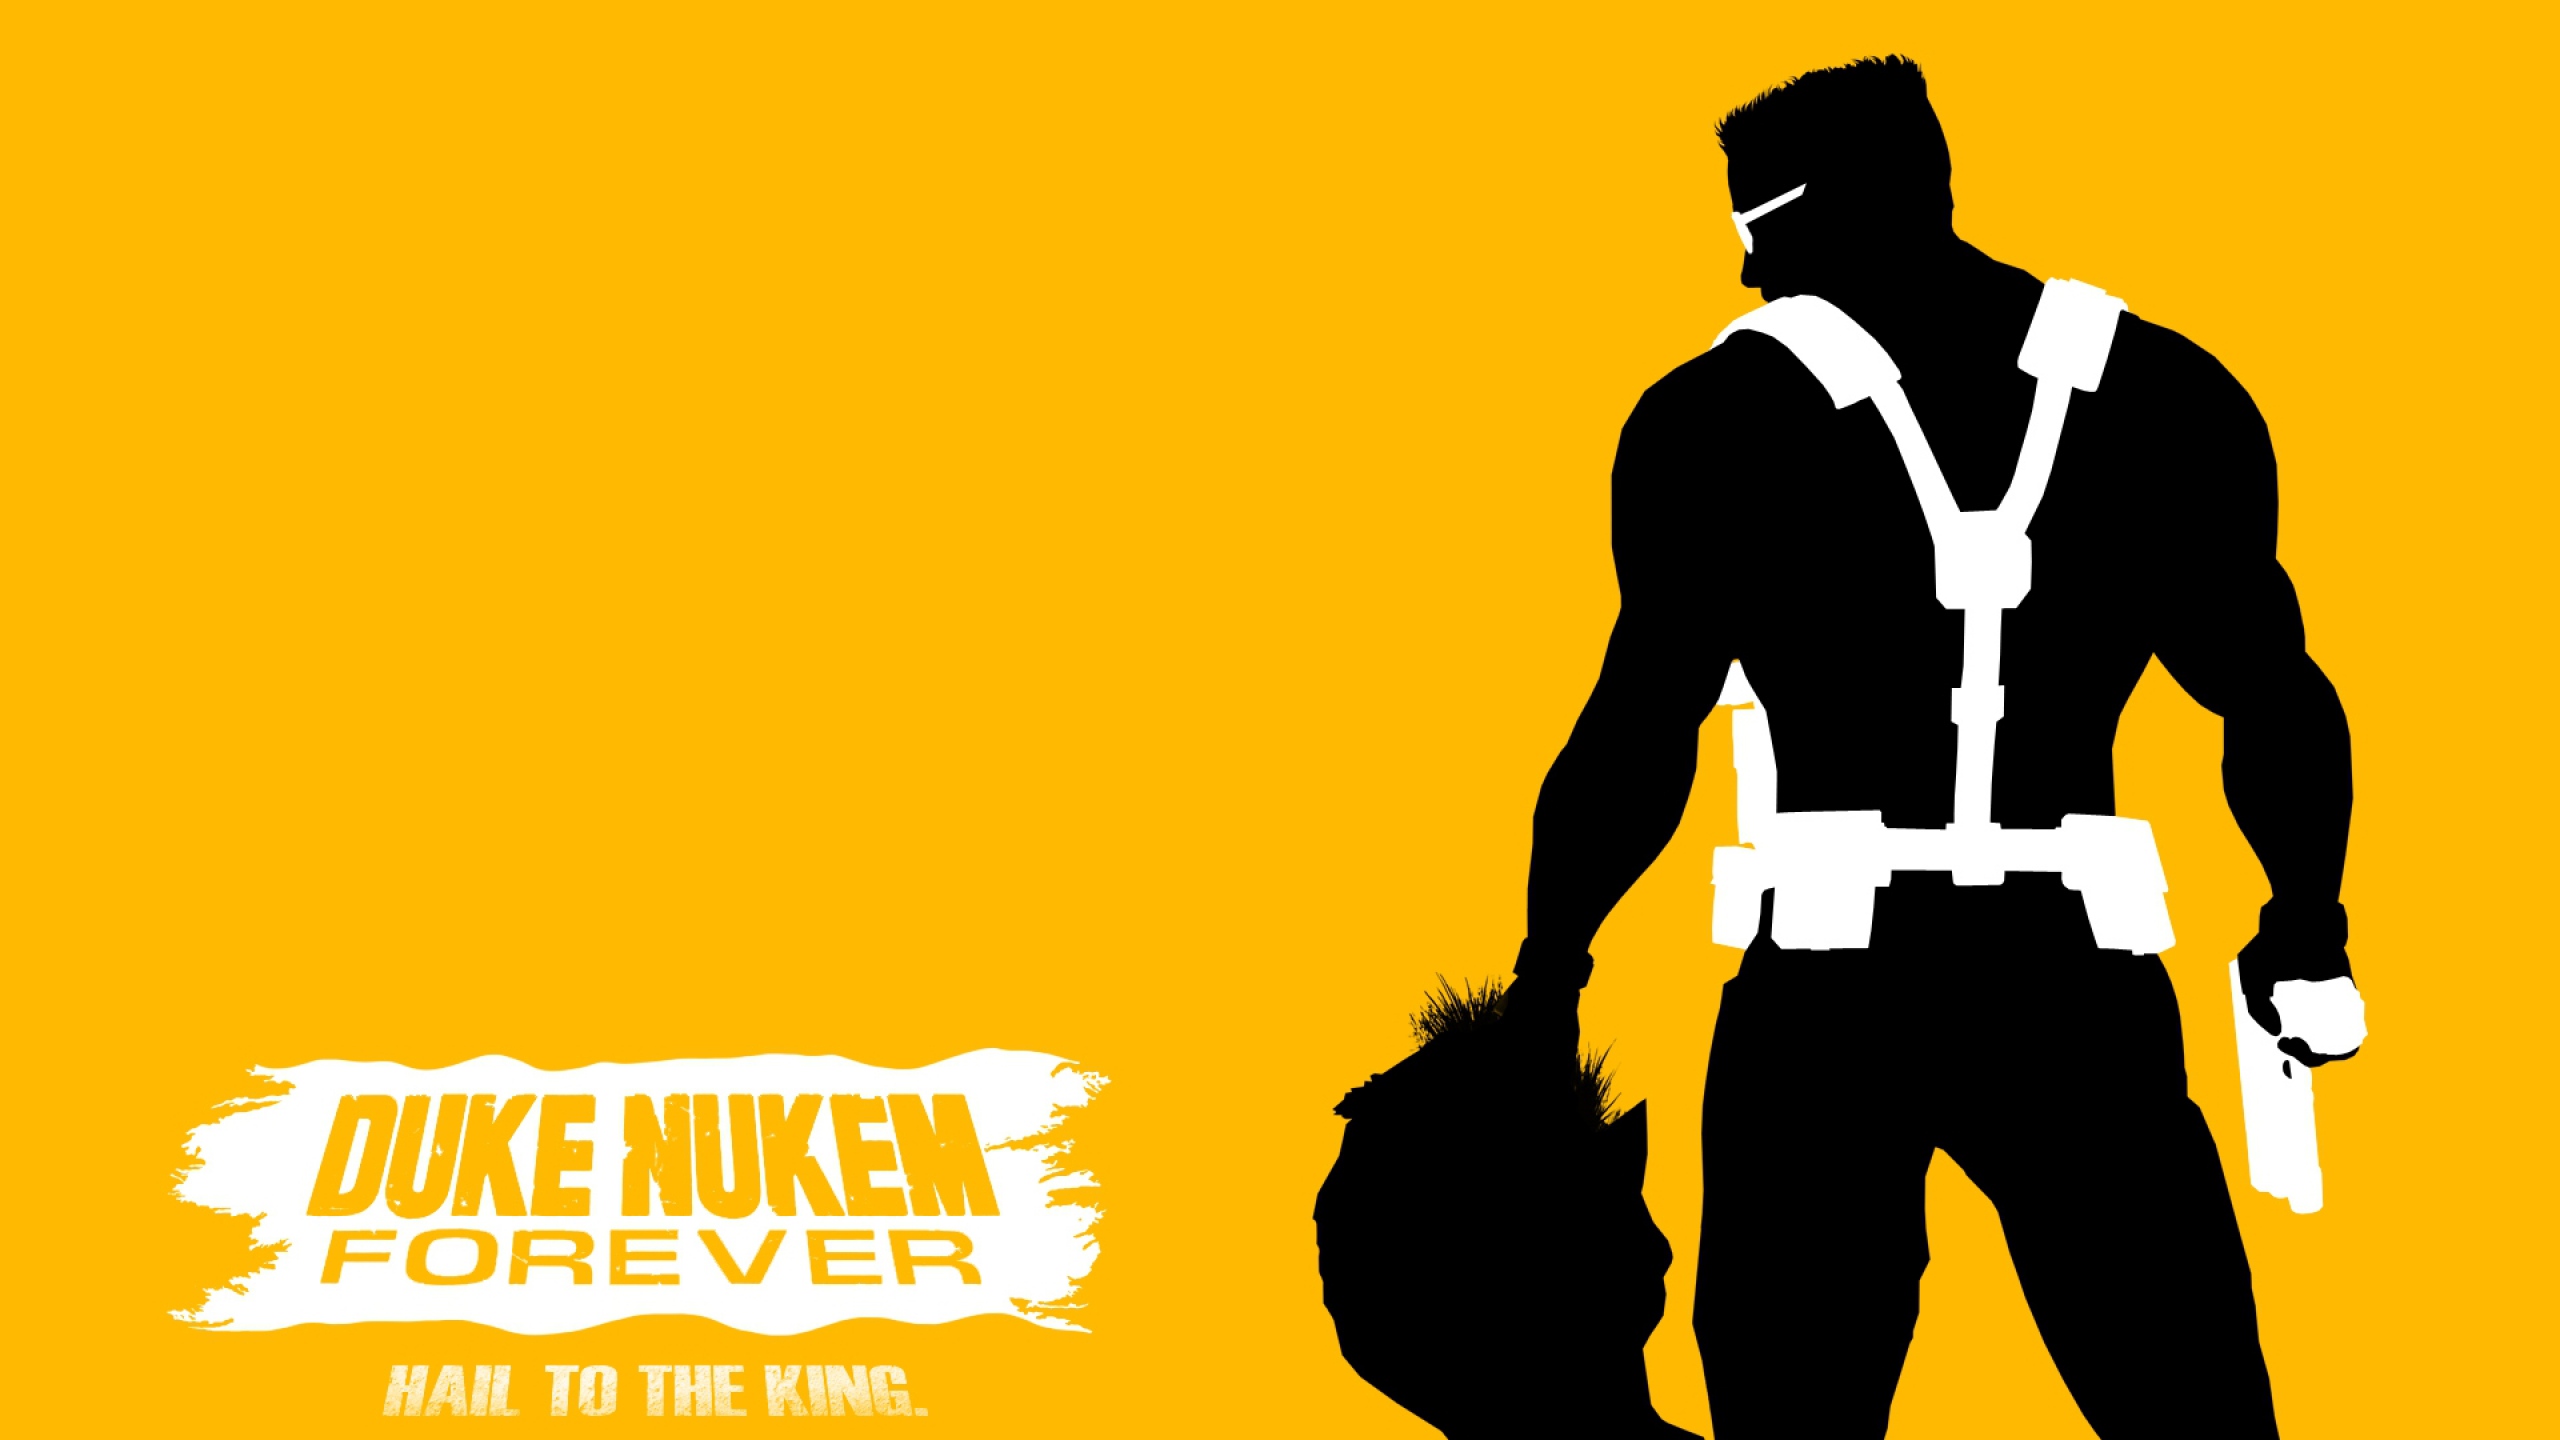 Download Free Duke Backgrounds Hd Hd Duke Image Wallpaper - Duke Nukem  Minimalist - 2560x1440 Wallpaper 